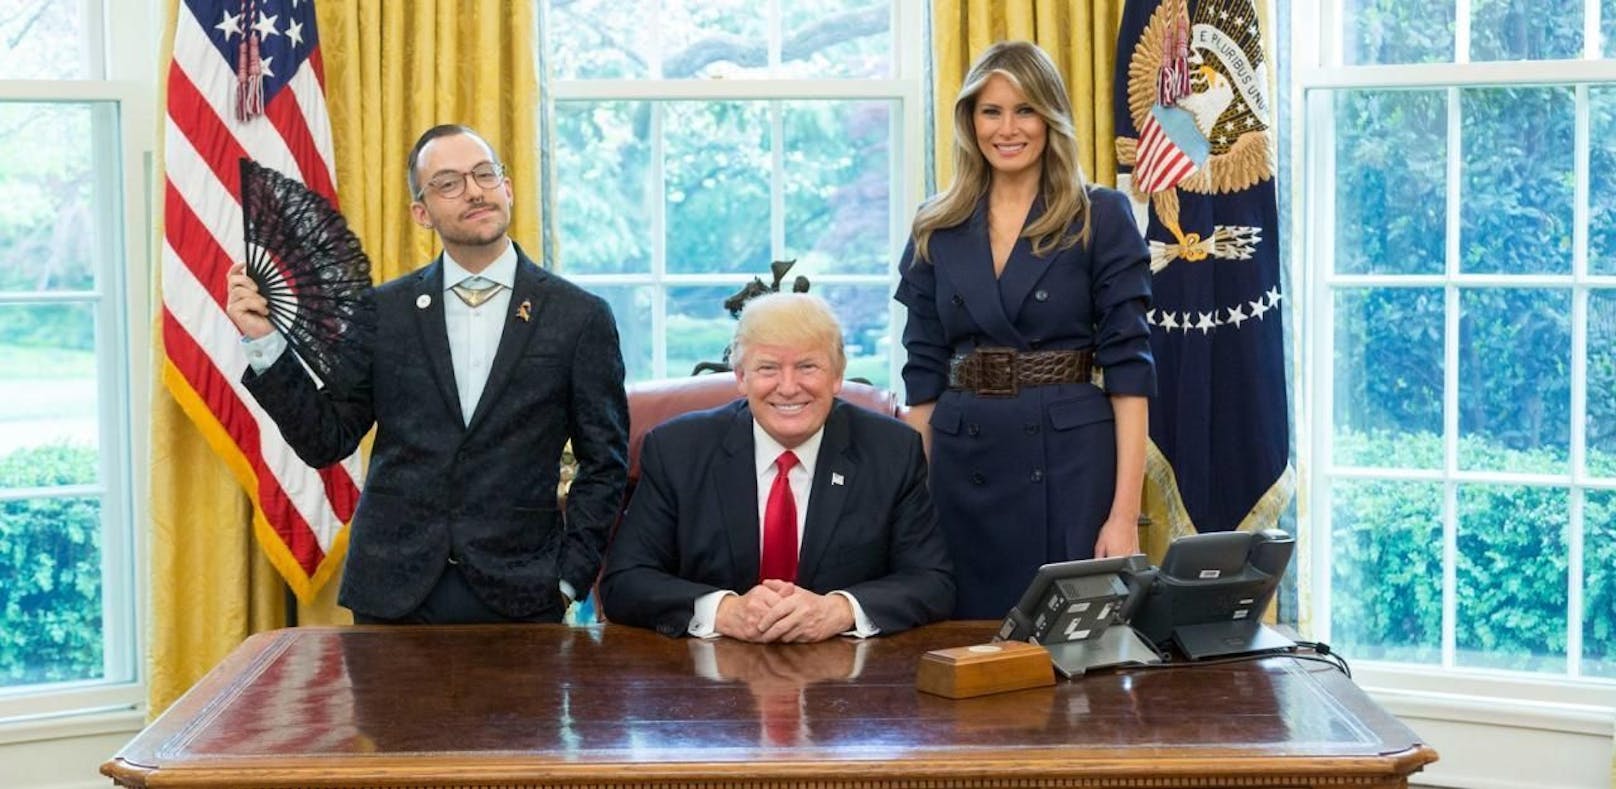 Nikos Giannopoulus zeigte sich beim Portrait mit Trump bewusst &quot;queer&quot;. (Bild: Official White House Photo by Shealah Craighead)